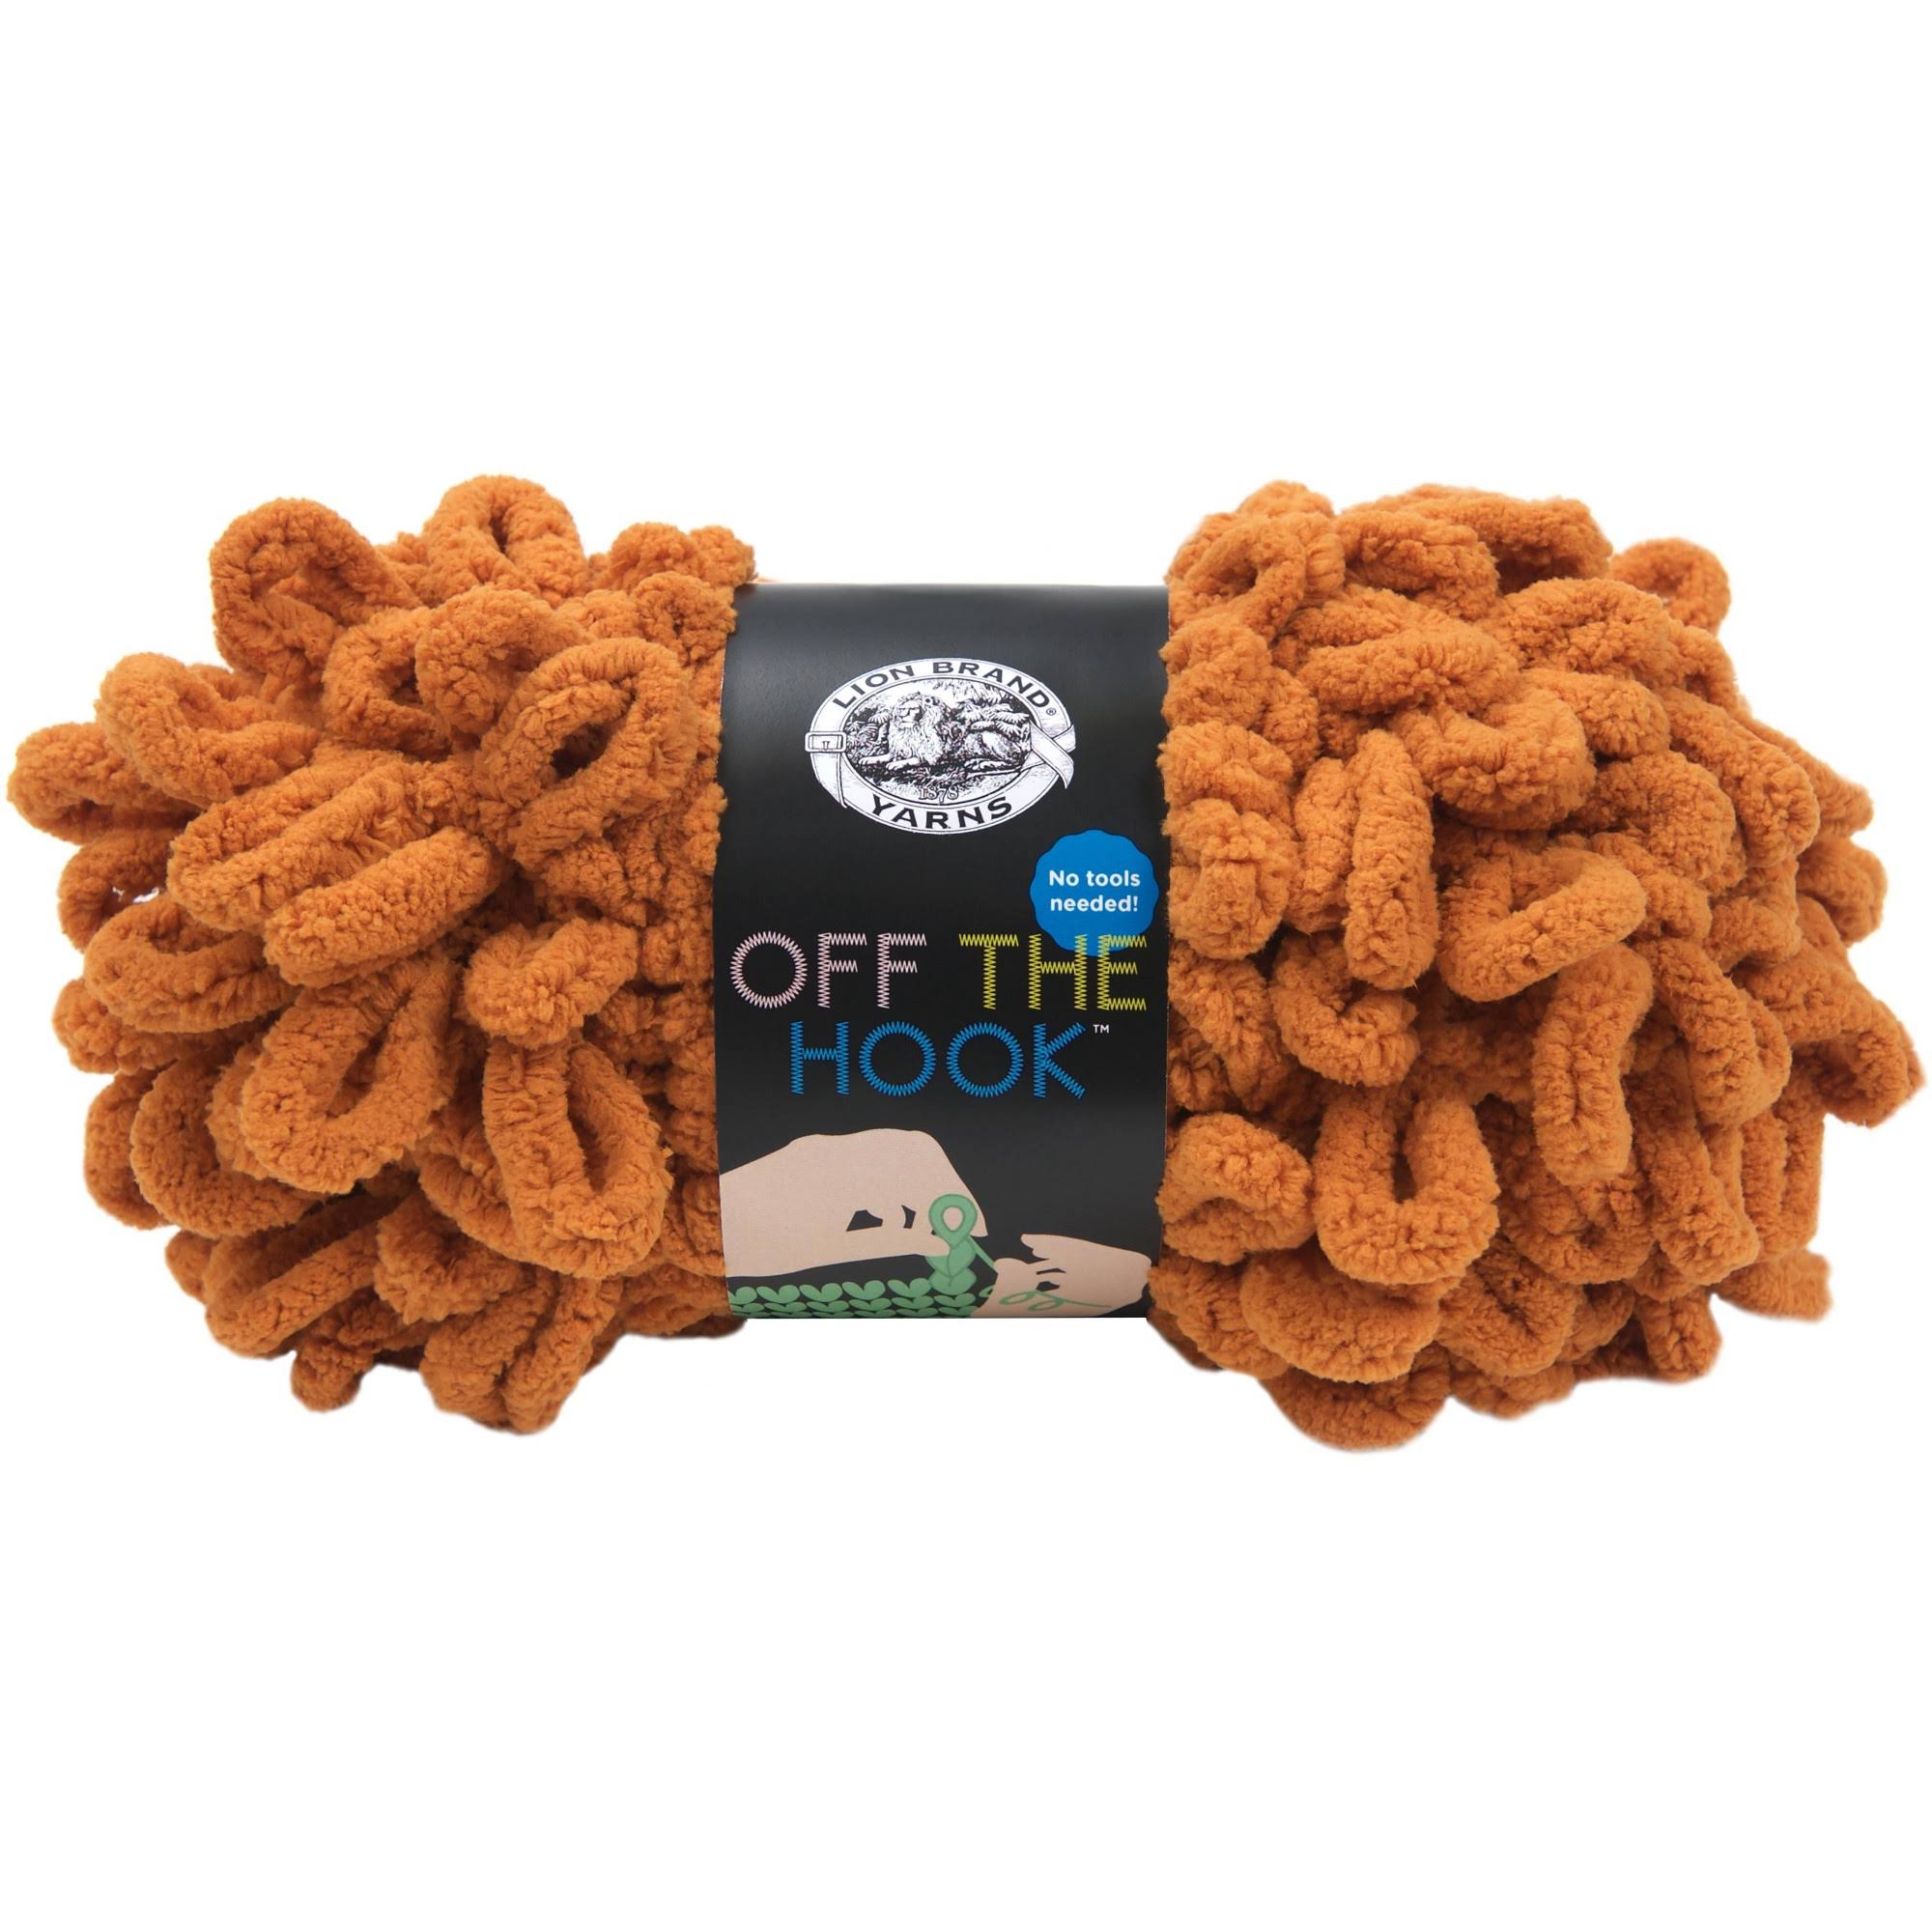 Lion Brand Yarn - Off The Hook - Spiced Pumpkin 100g